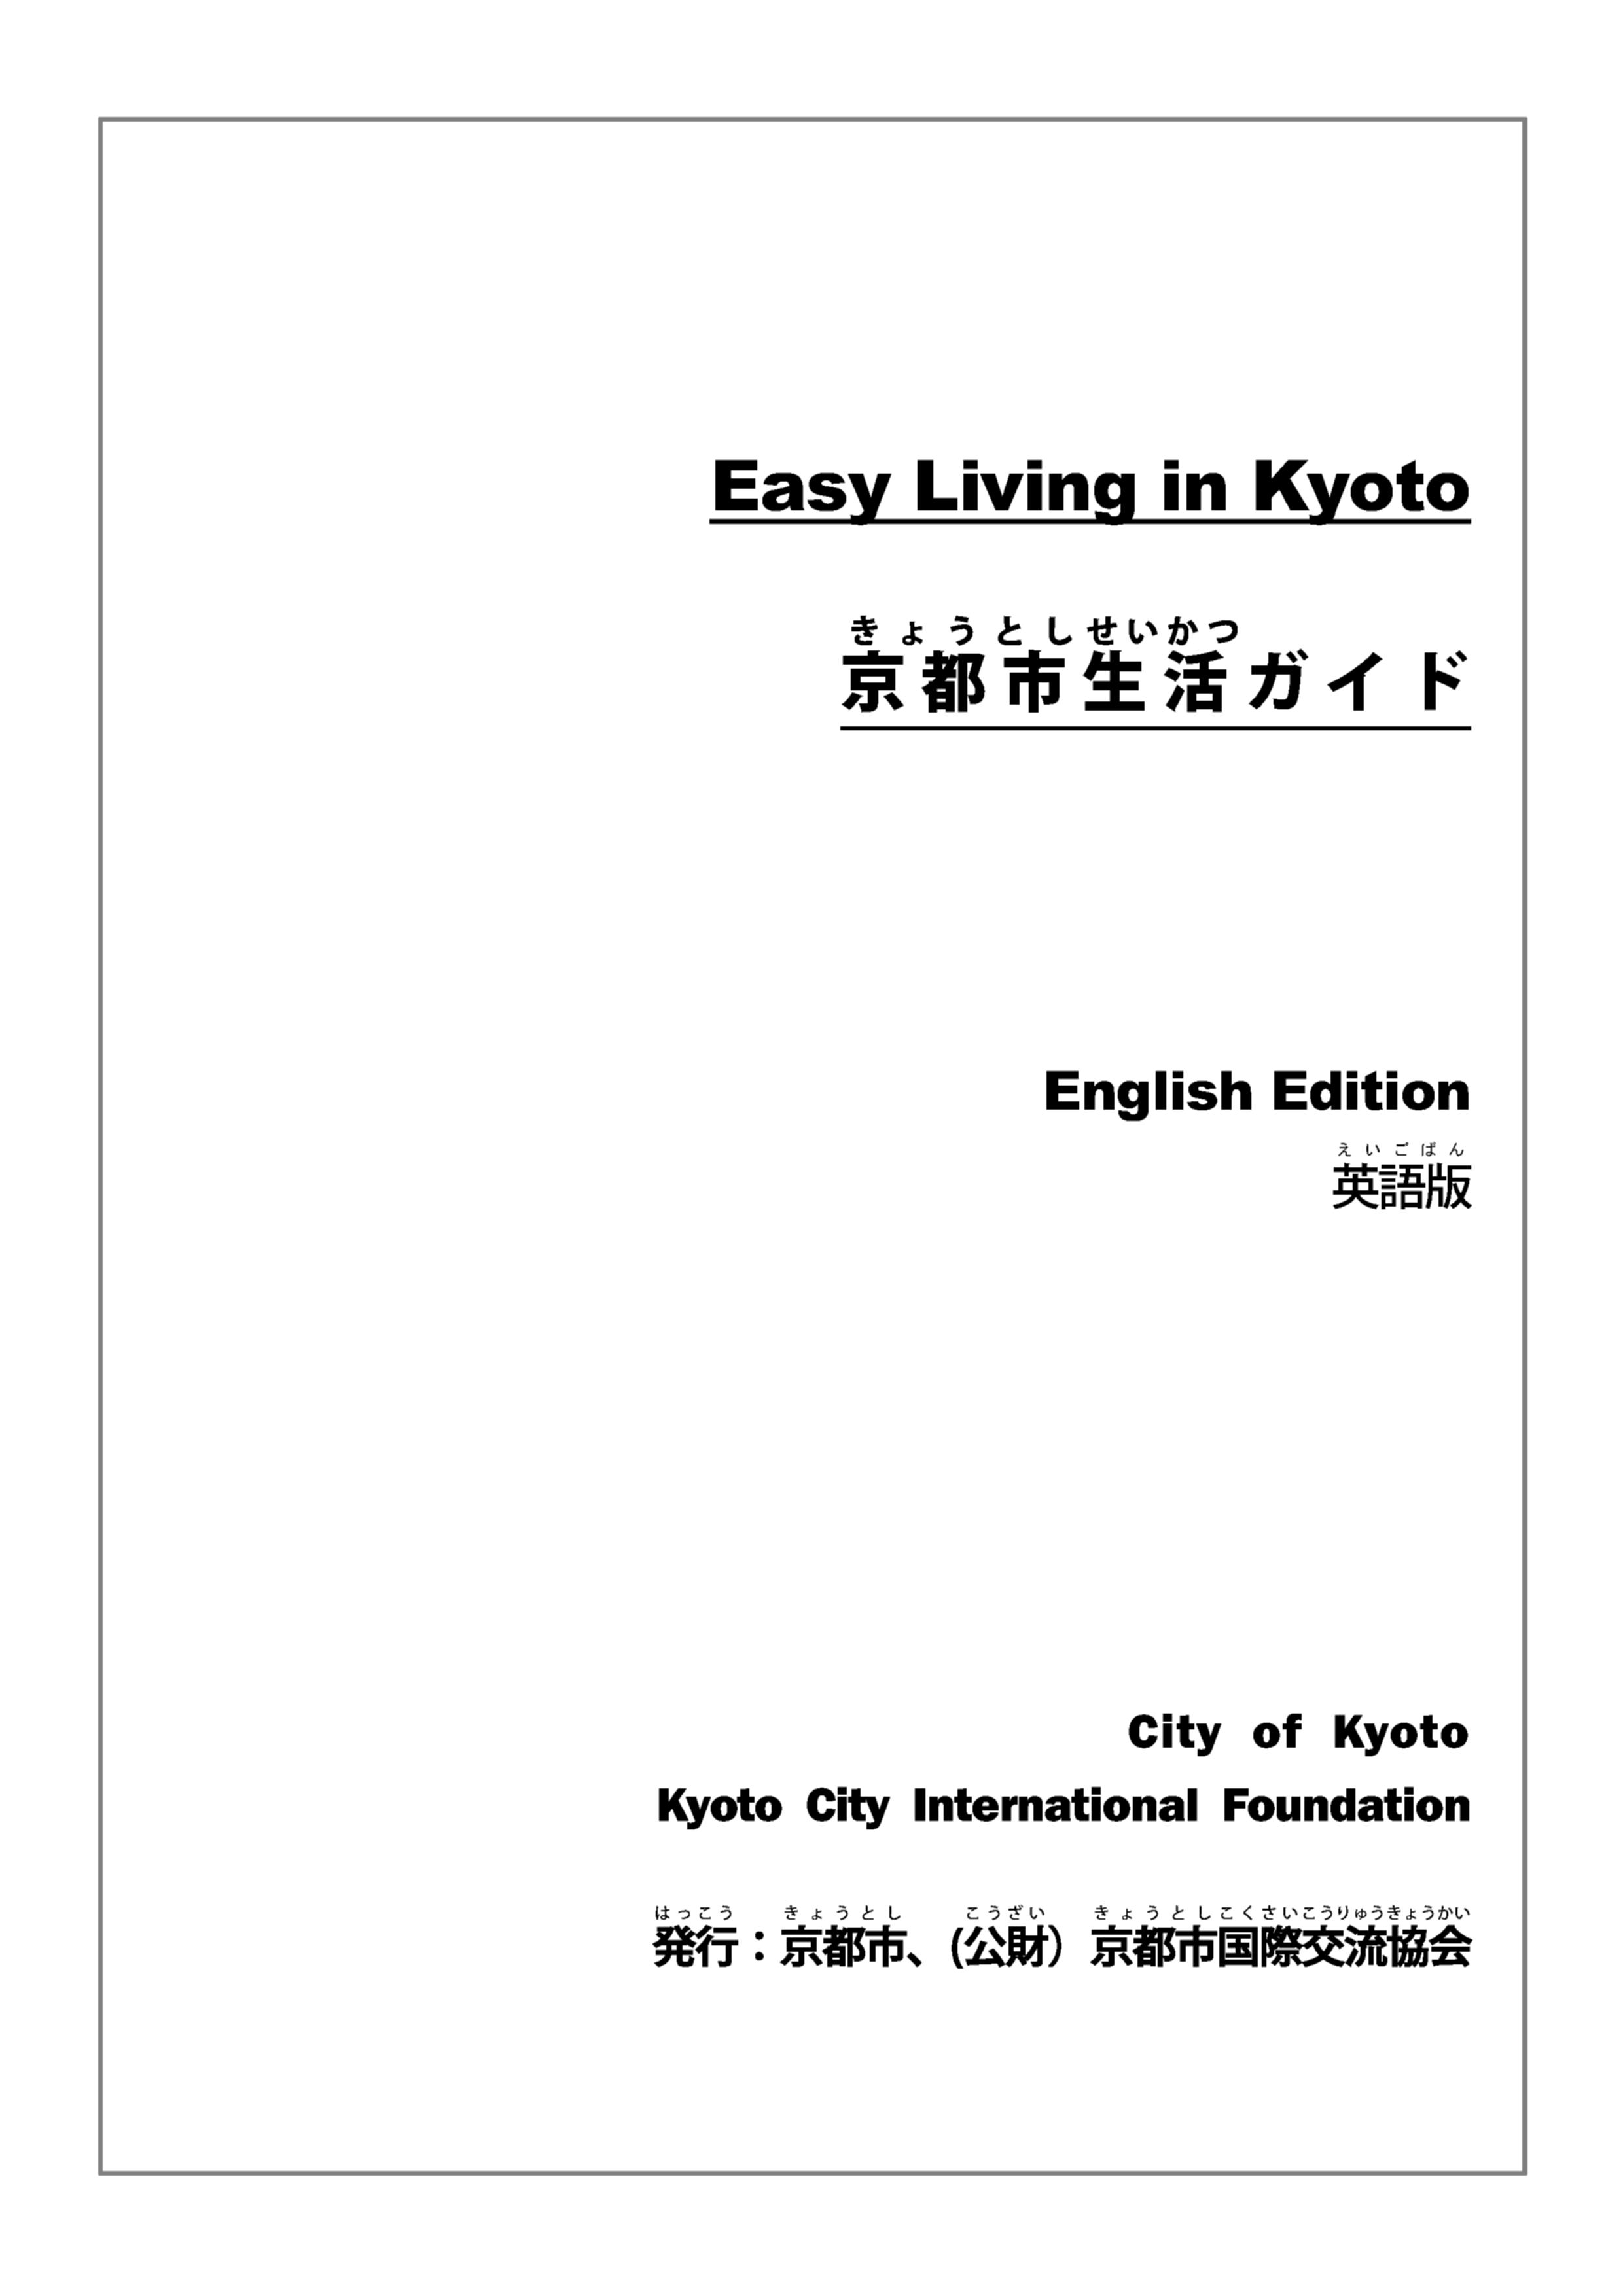 Easy-Living-in-Kyoto.jpg